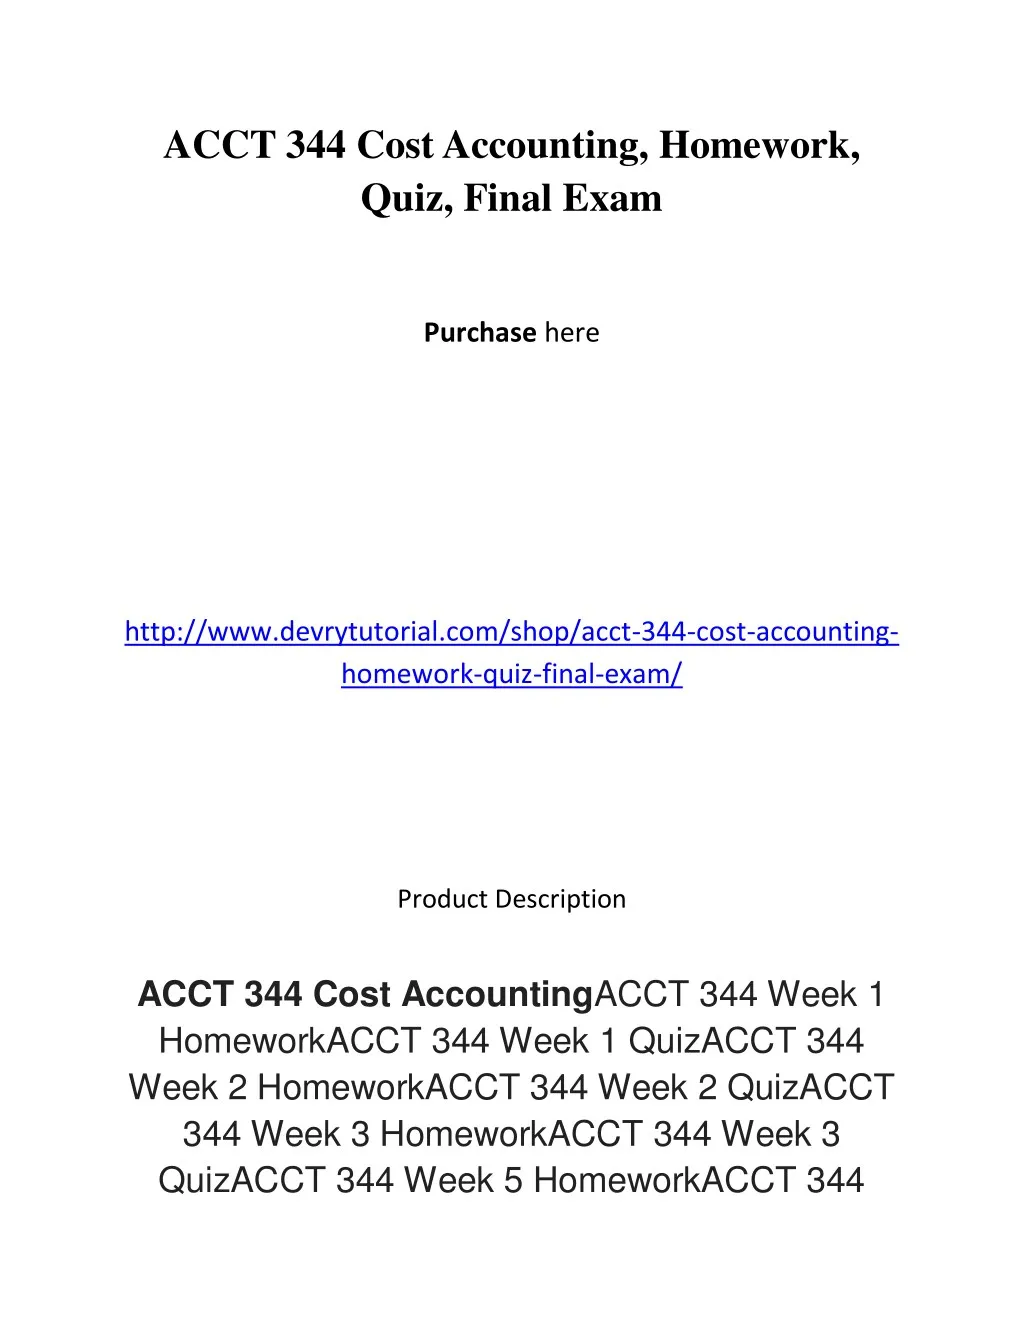 acct 344 cost accounting homework quiz final exam